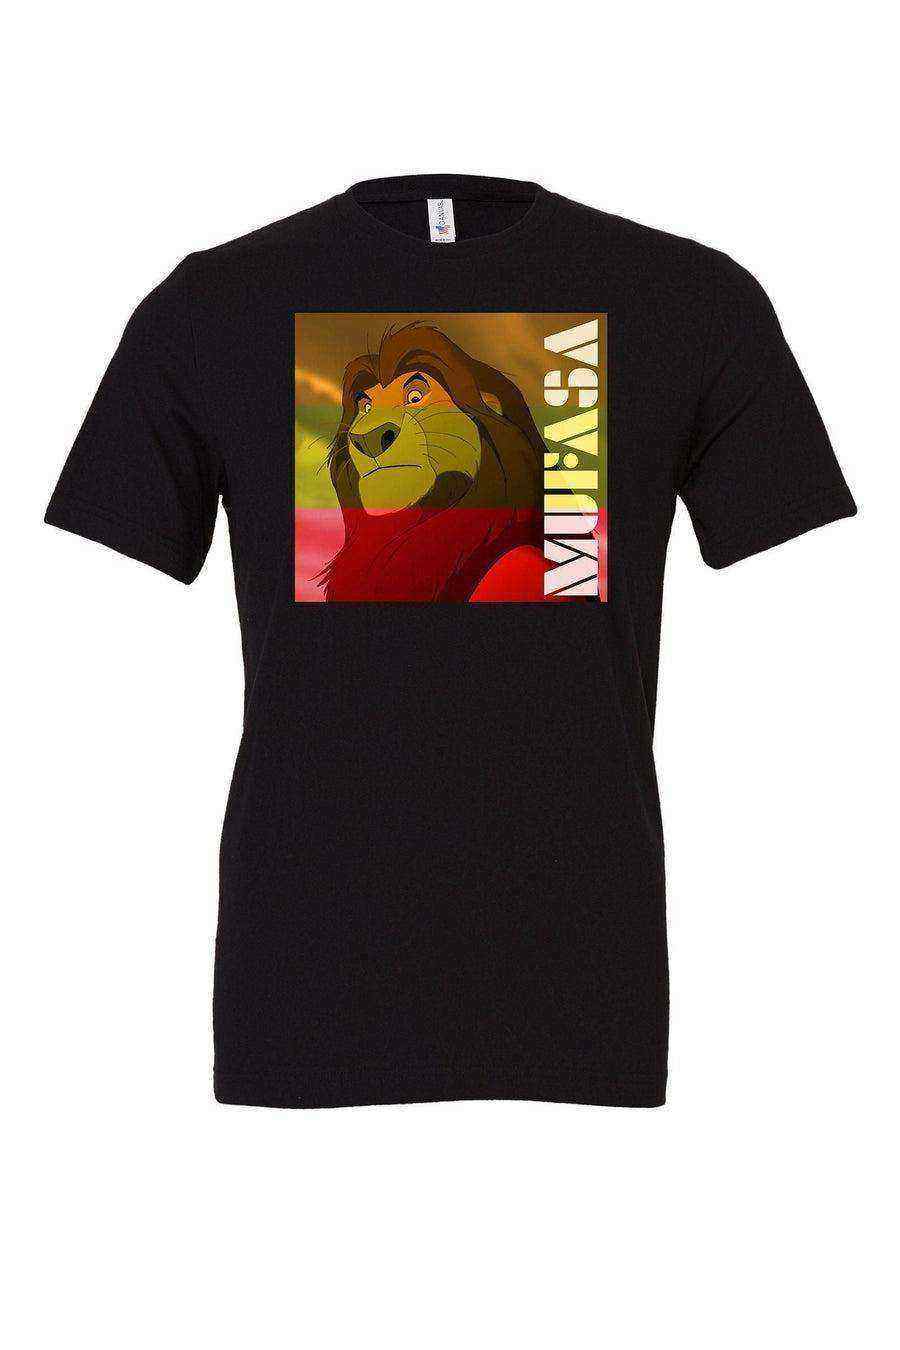 Mufasa Marley Shirt | Lion King Shirt - Dylan's Tees